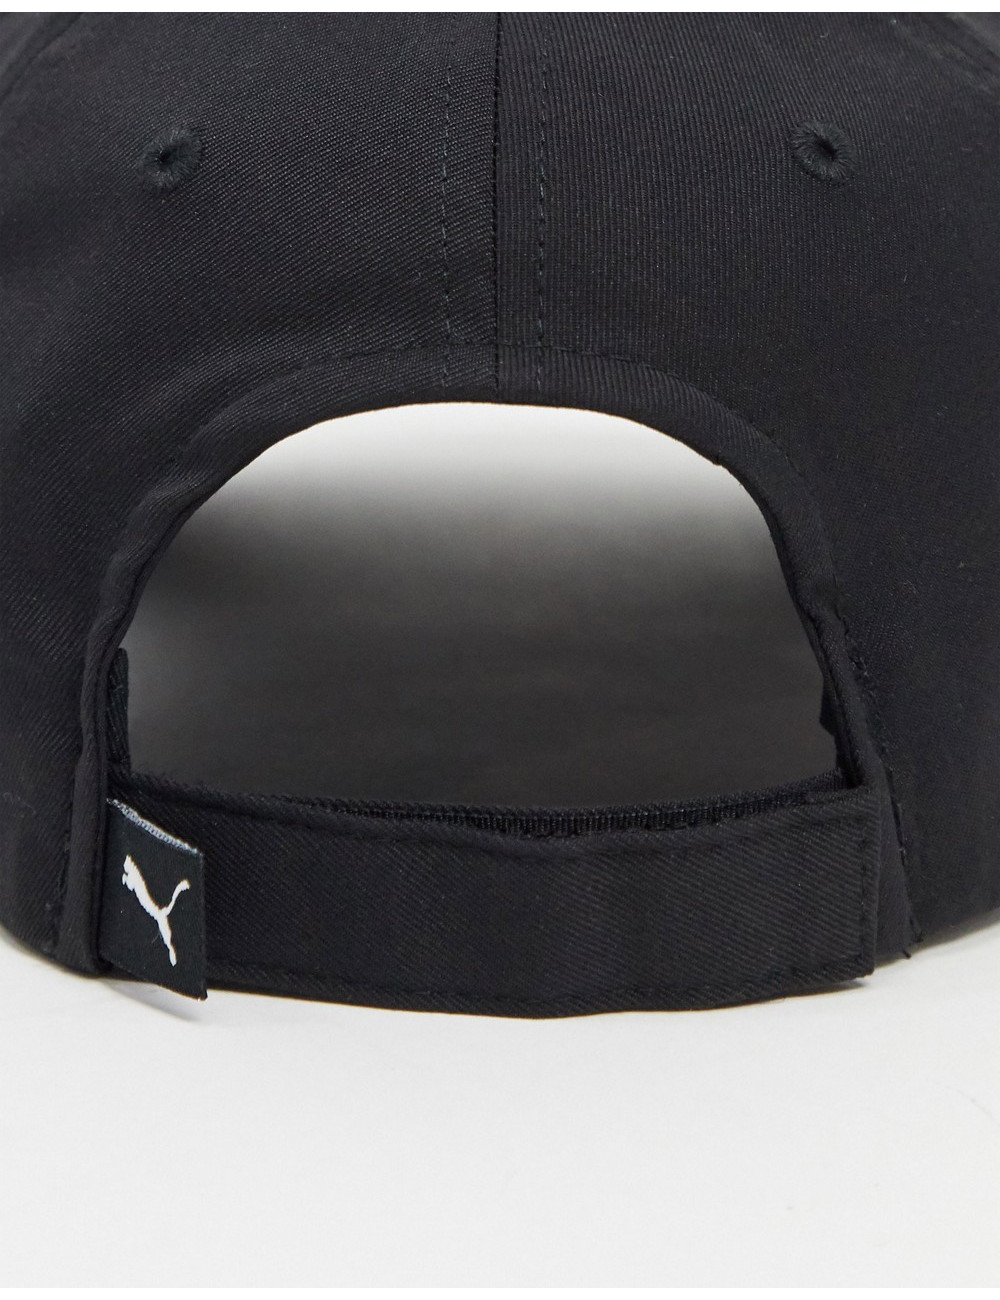 Puma metal logo cap in black